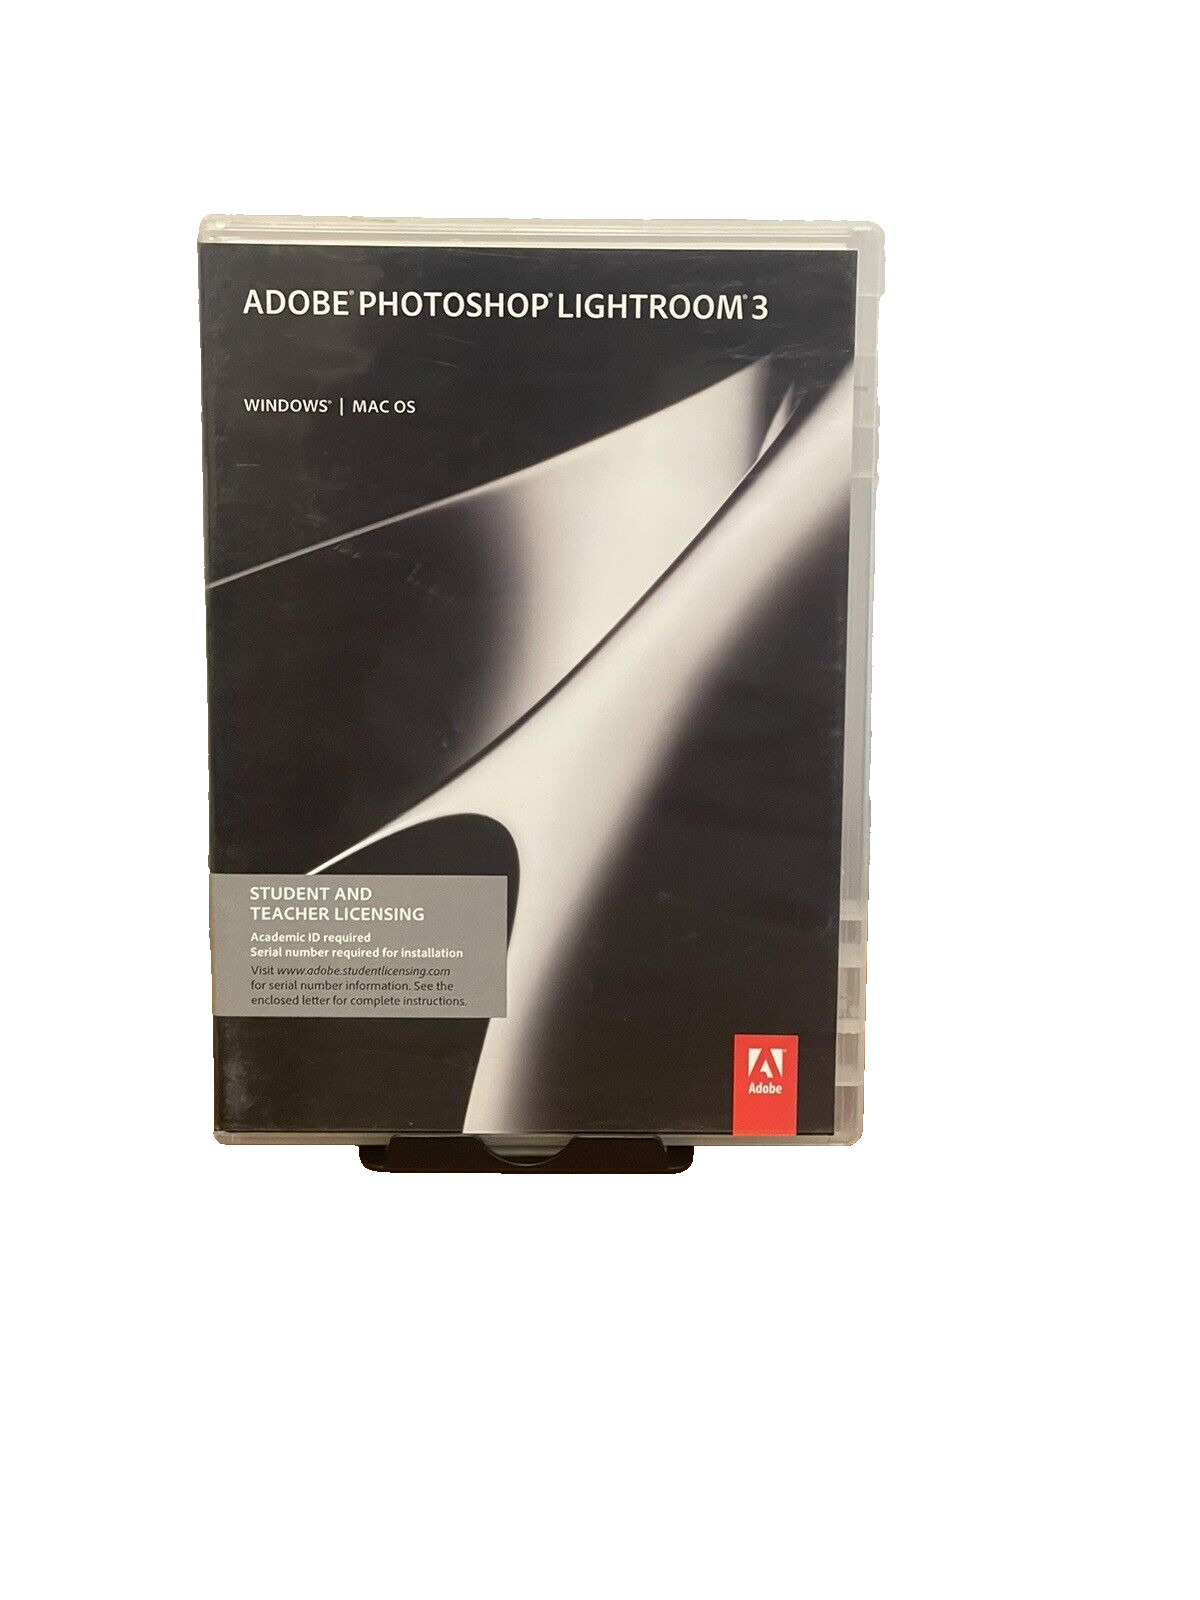 Adobe Photoshop Lightroom 3 Student and Teacher Edition w/ key